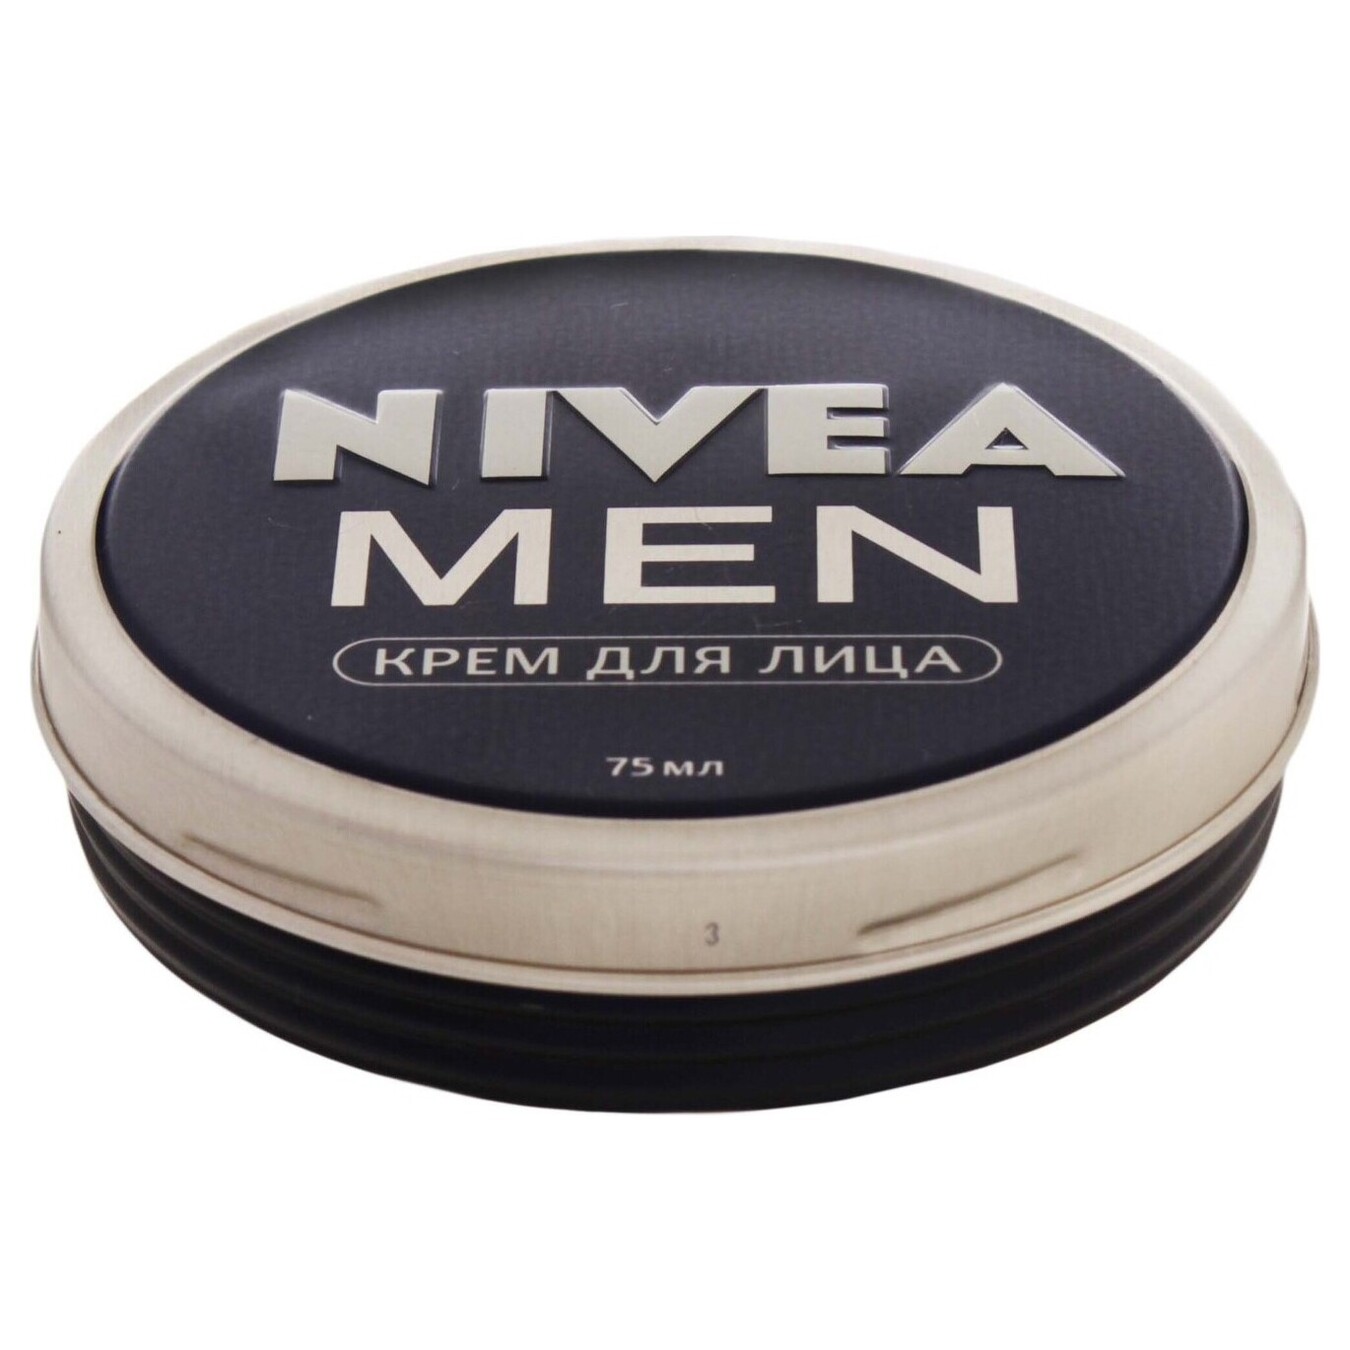 Nivea face cream for men 75 ml 2